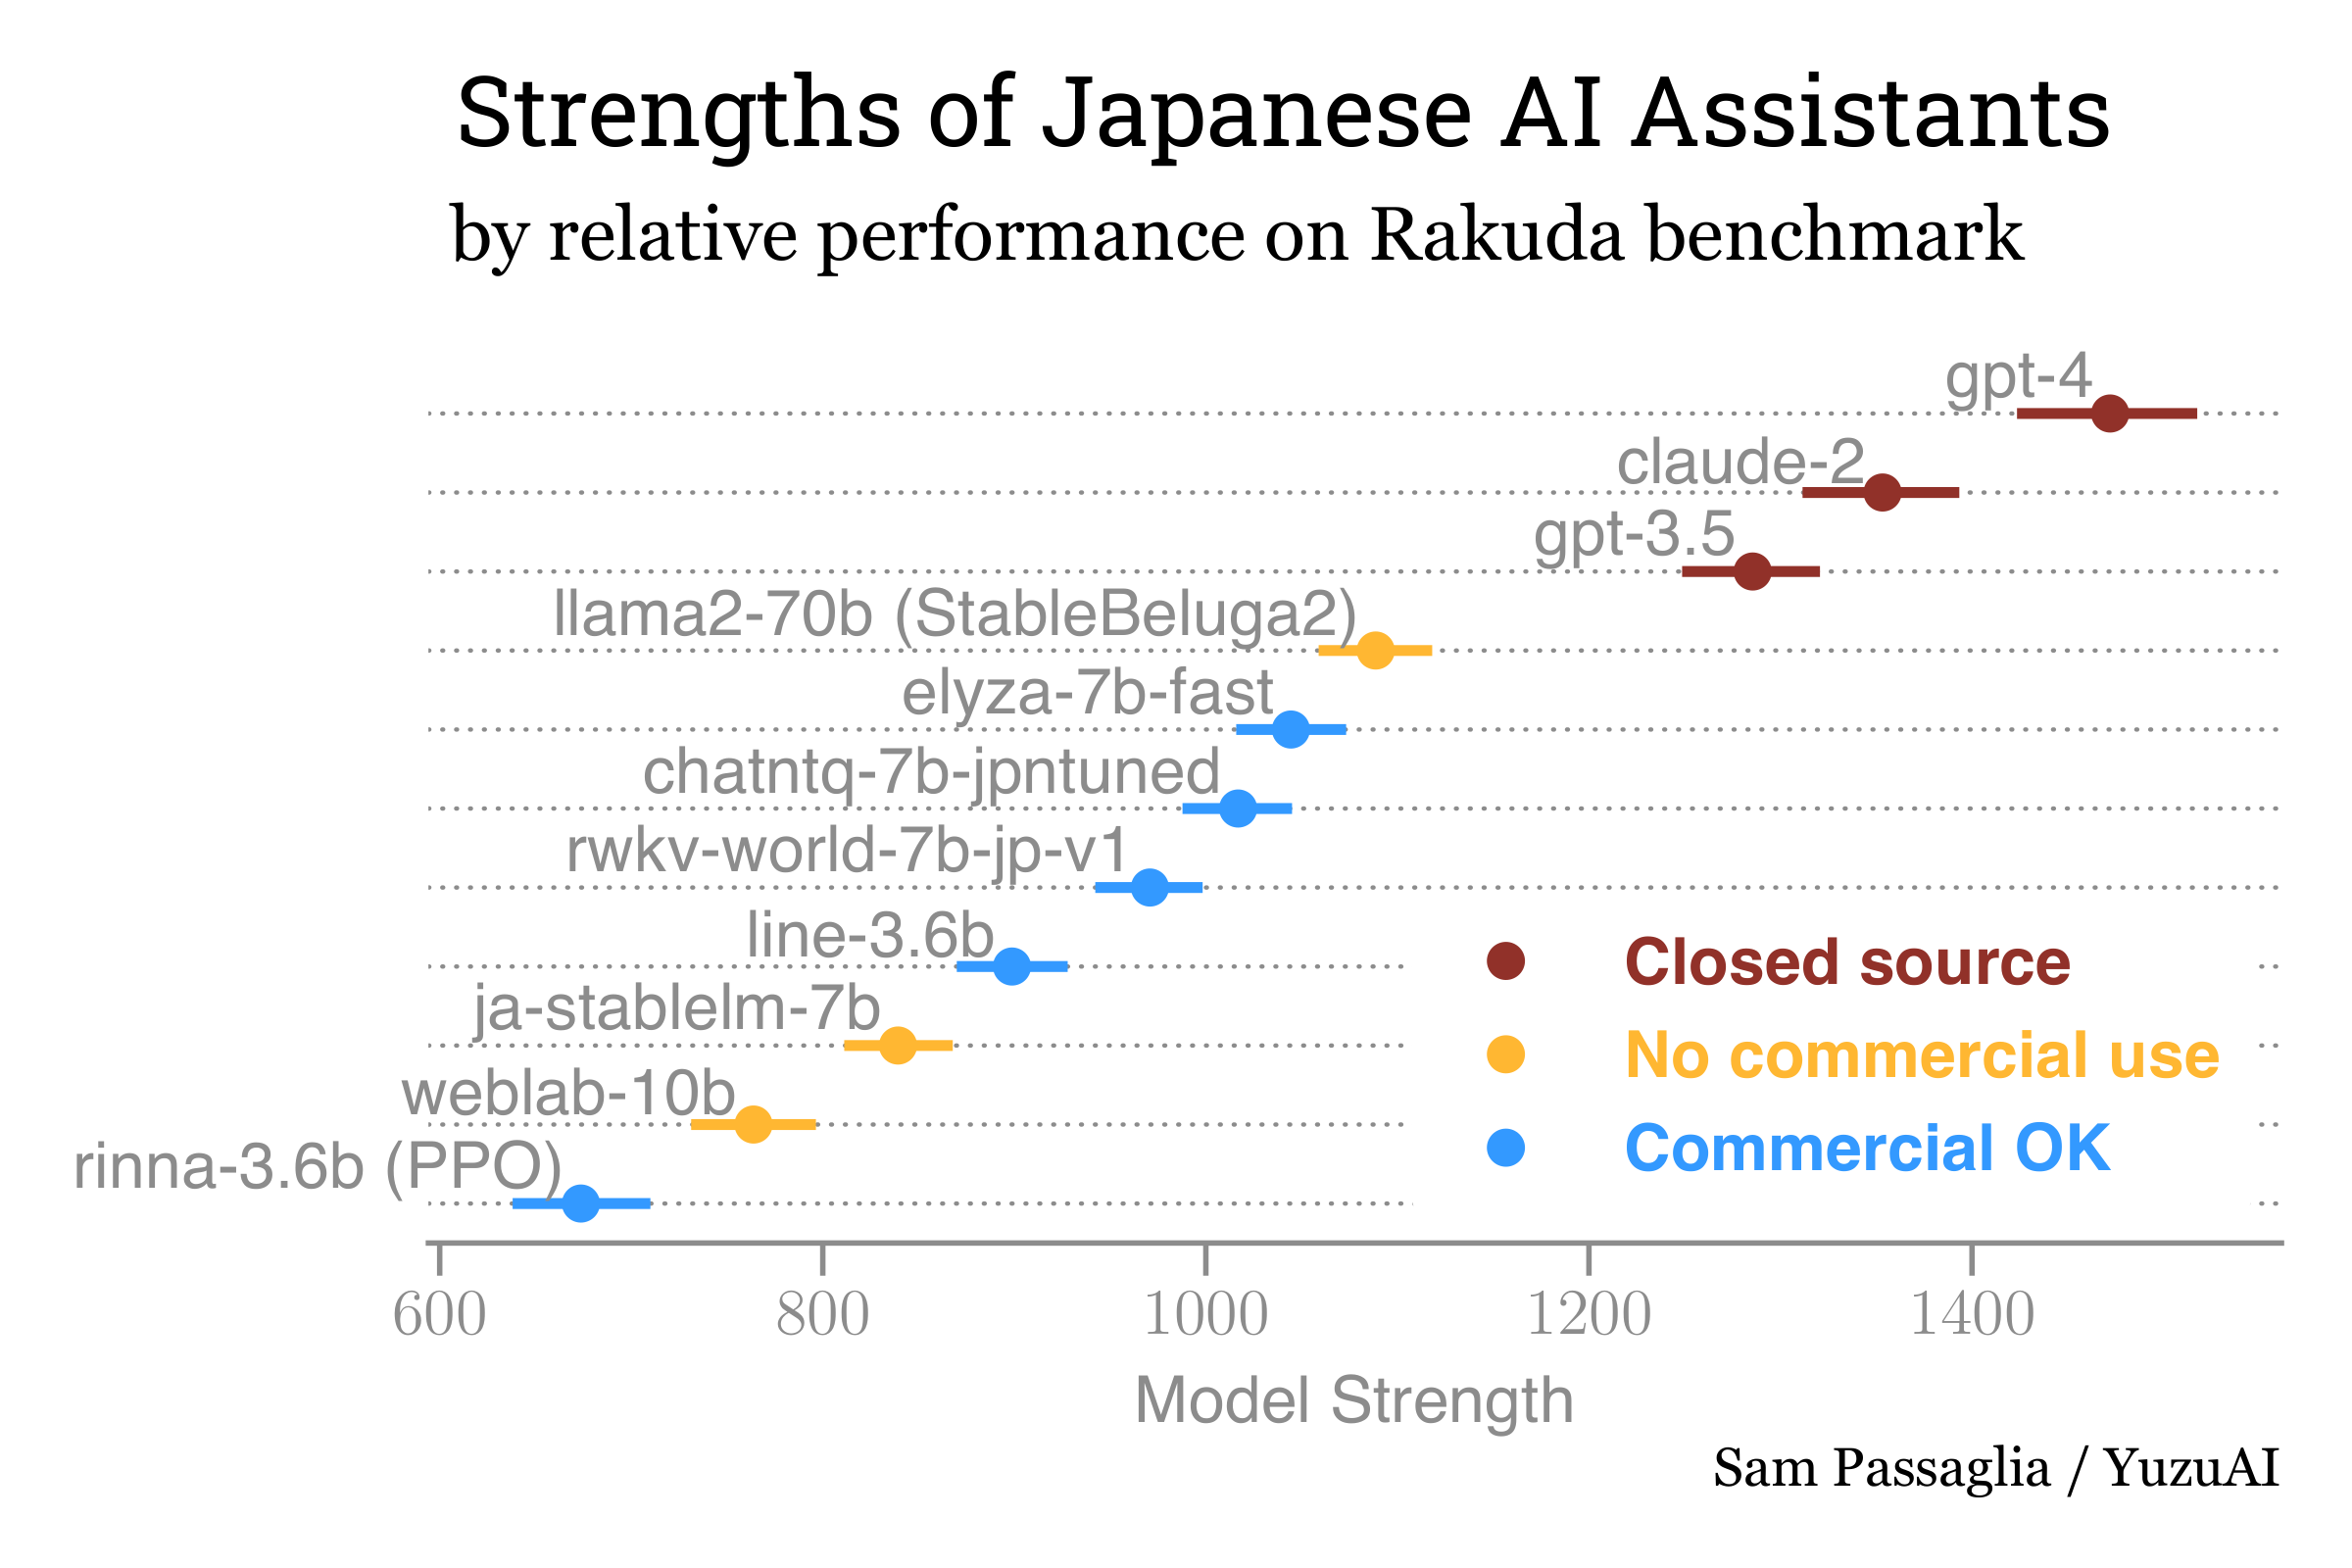 Chart showing relative strength of models on Rakuda benchmark